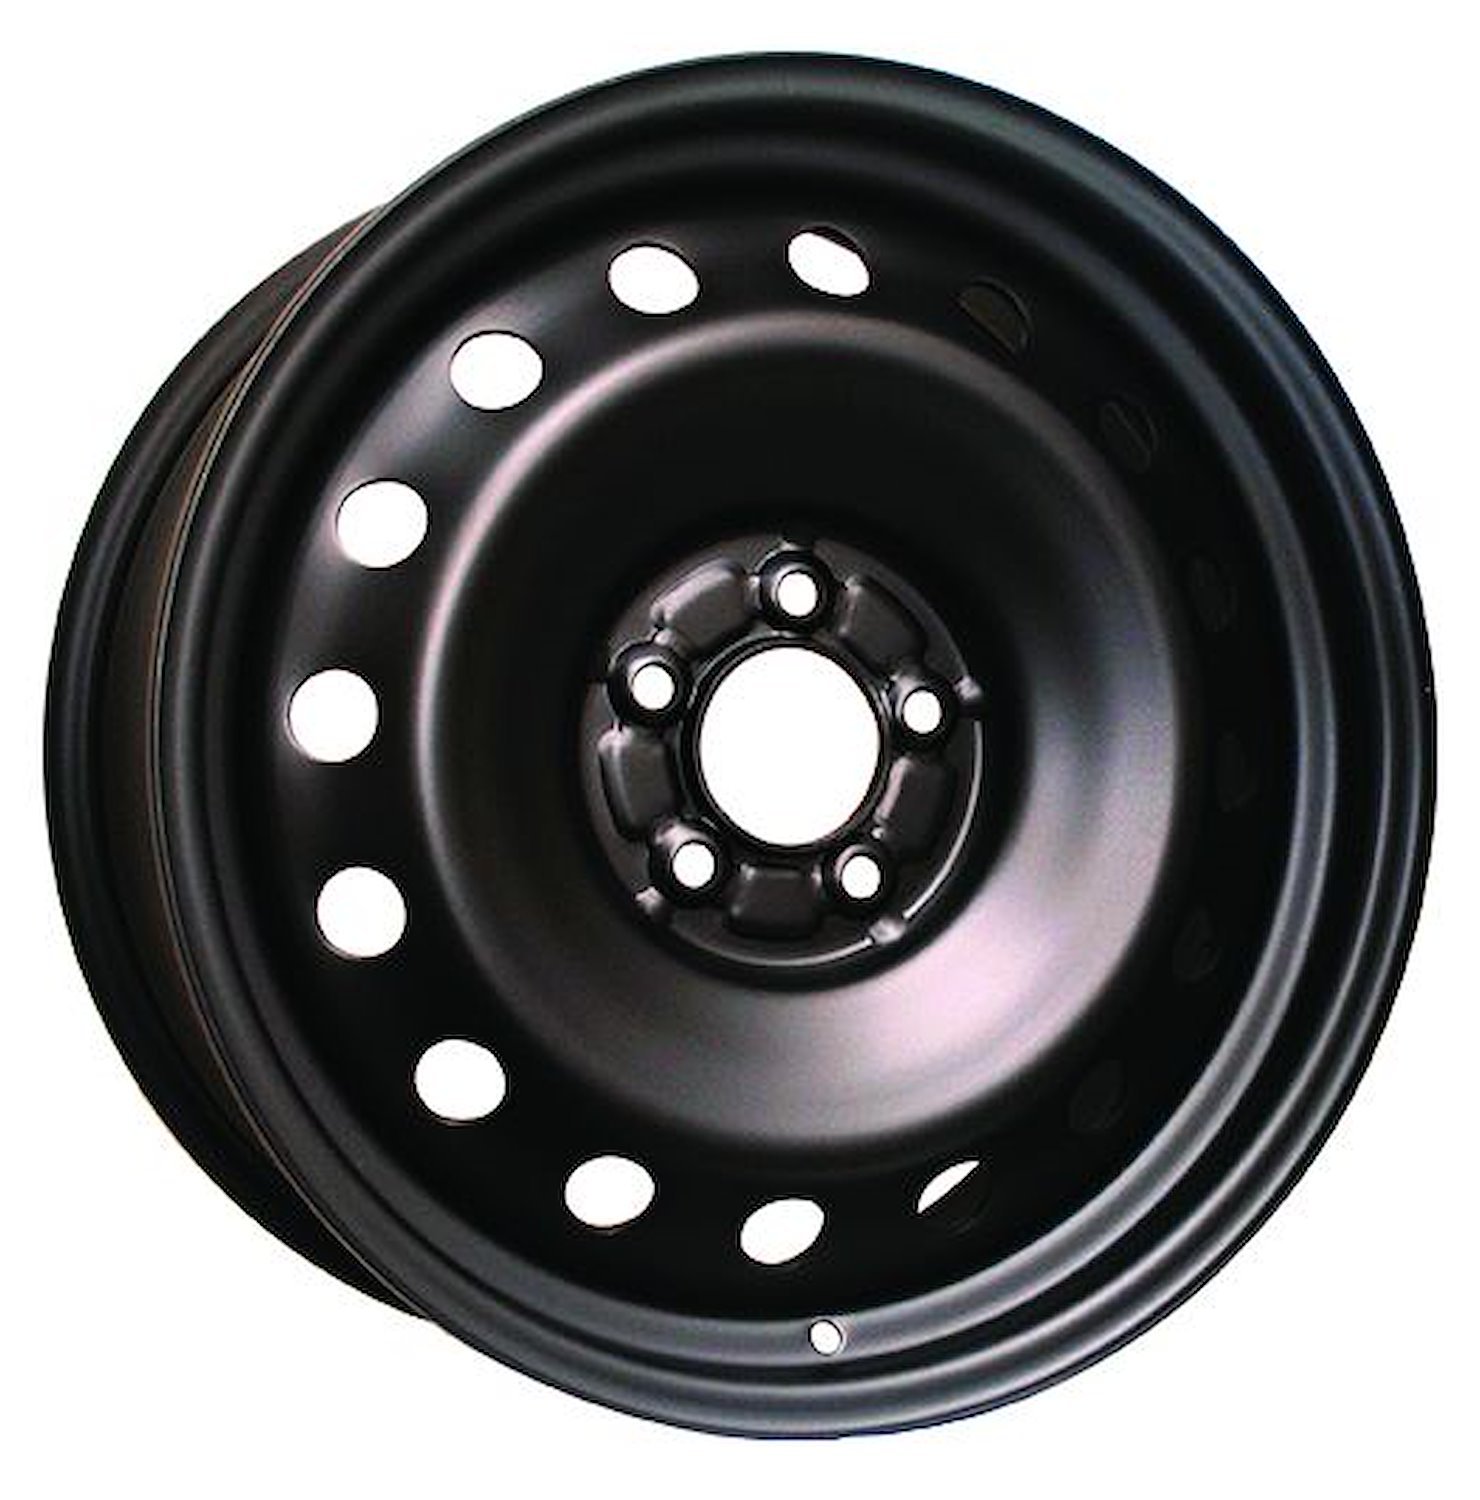 X48505 Steel Wheel [Size: 18" x 7.50"] Black Finish